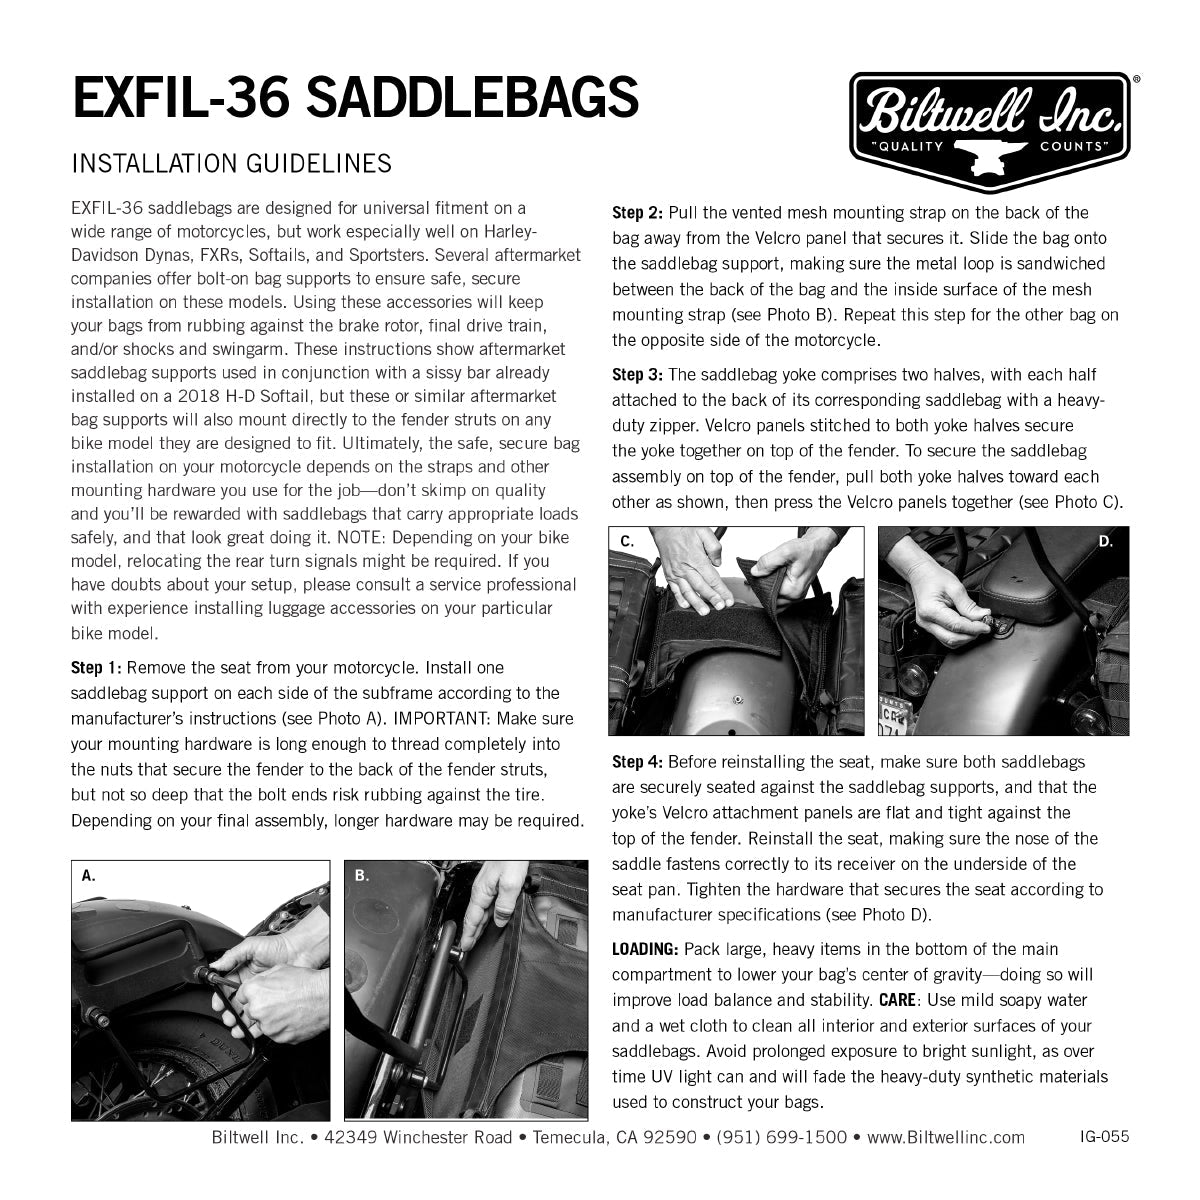 EXFIL-36 Saddlebag Replacement